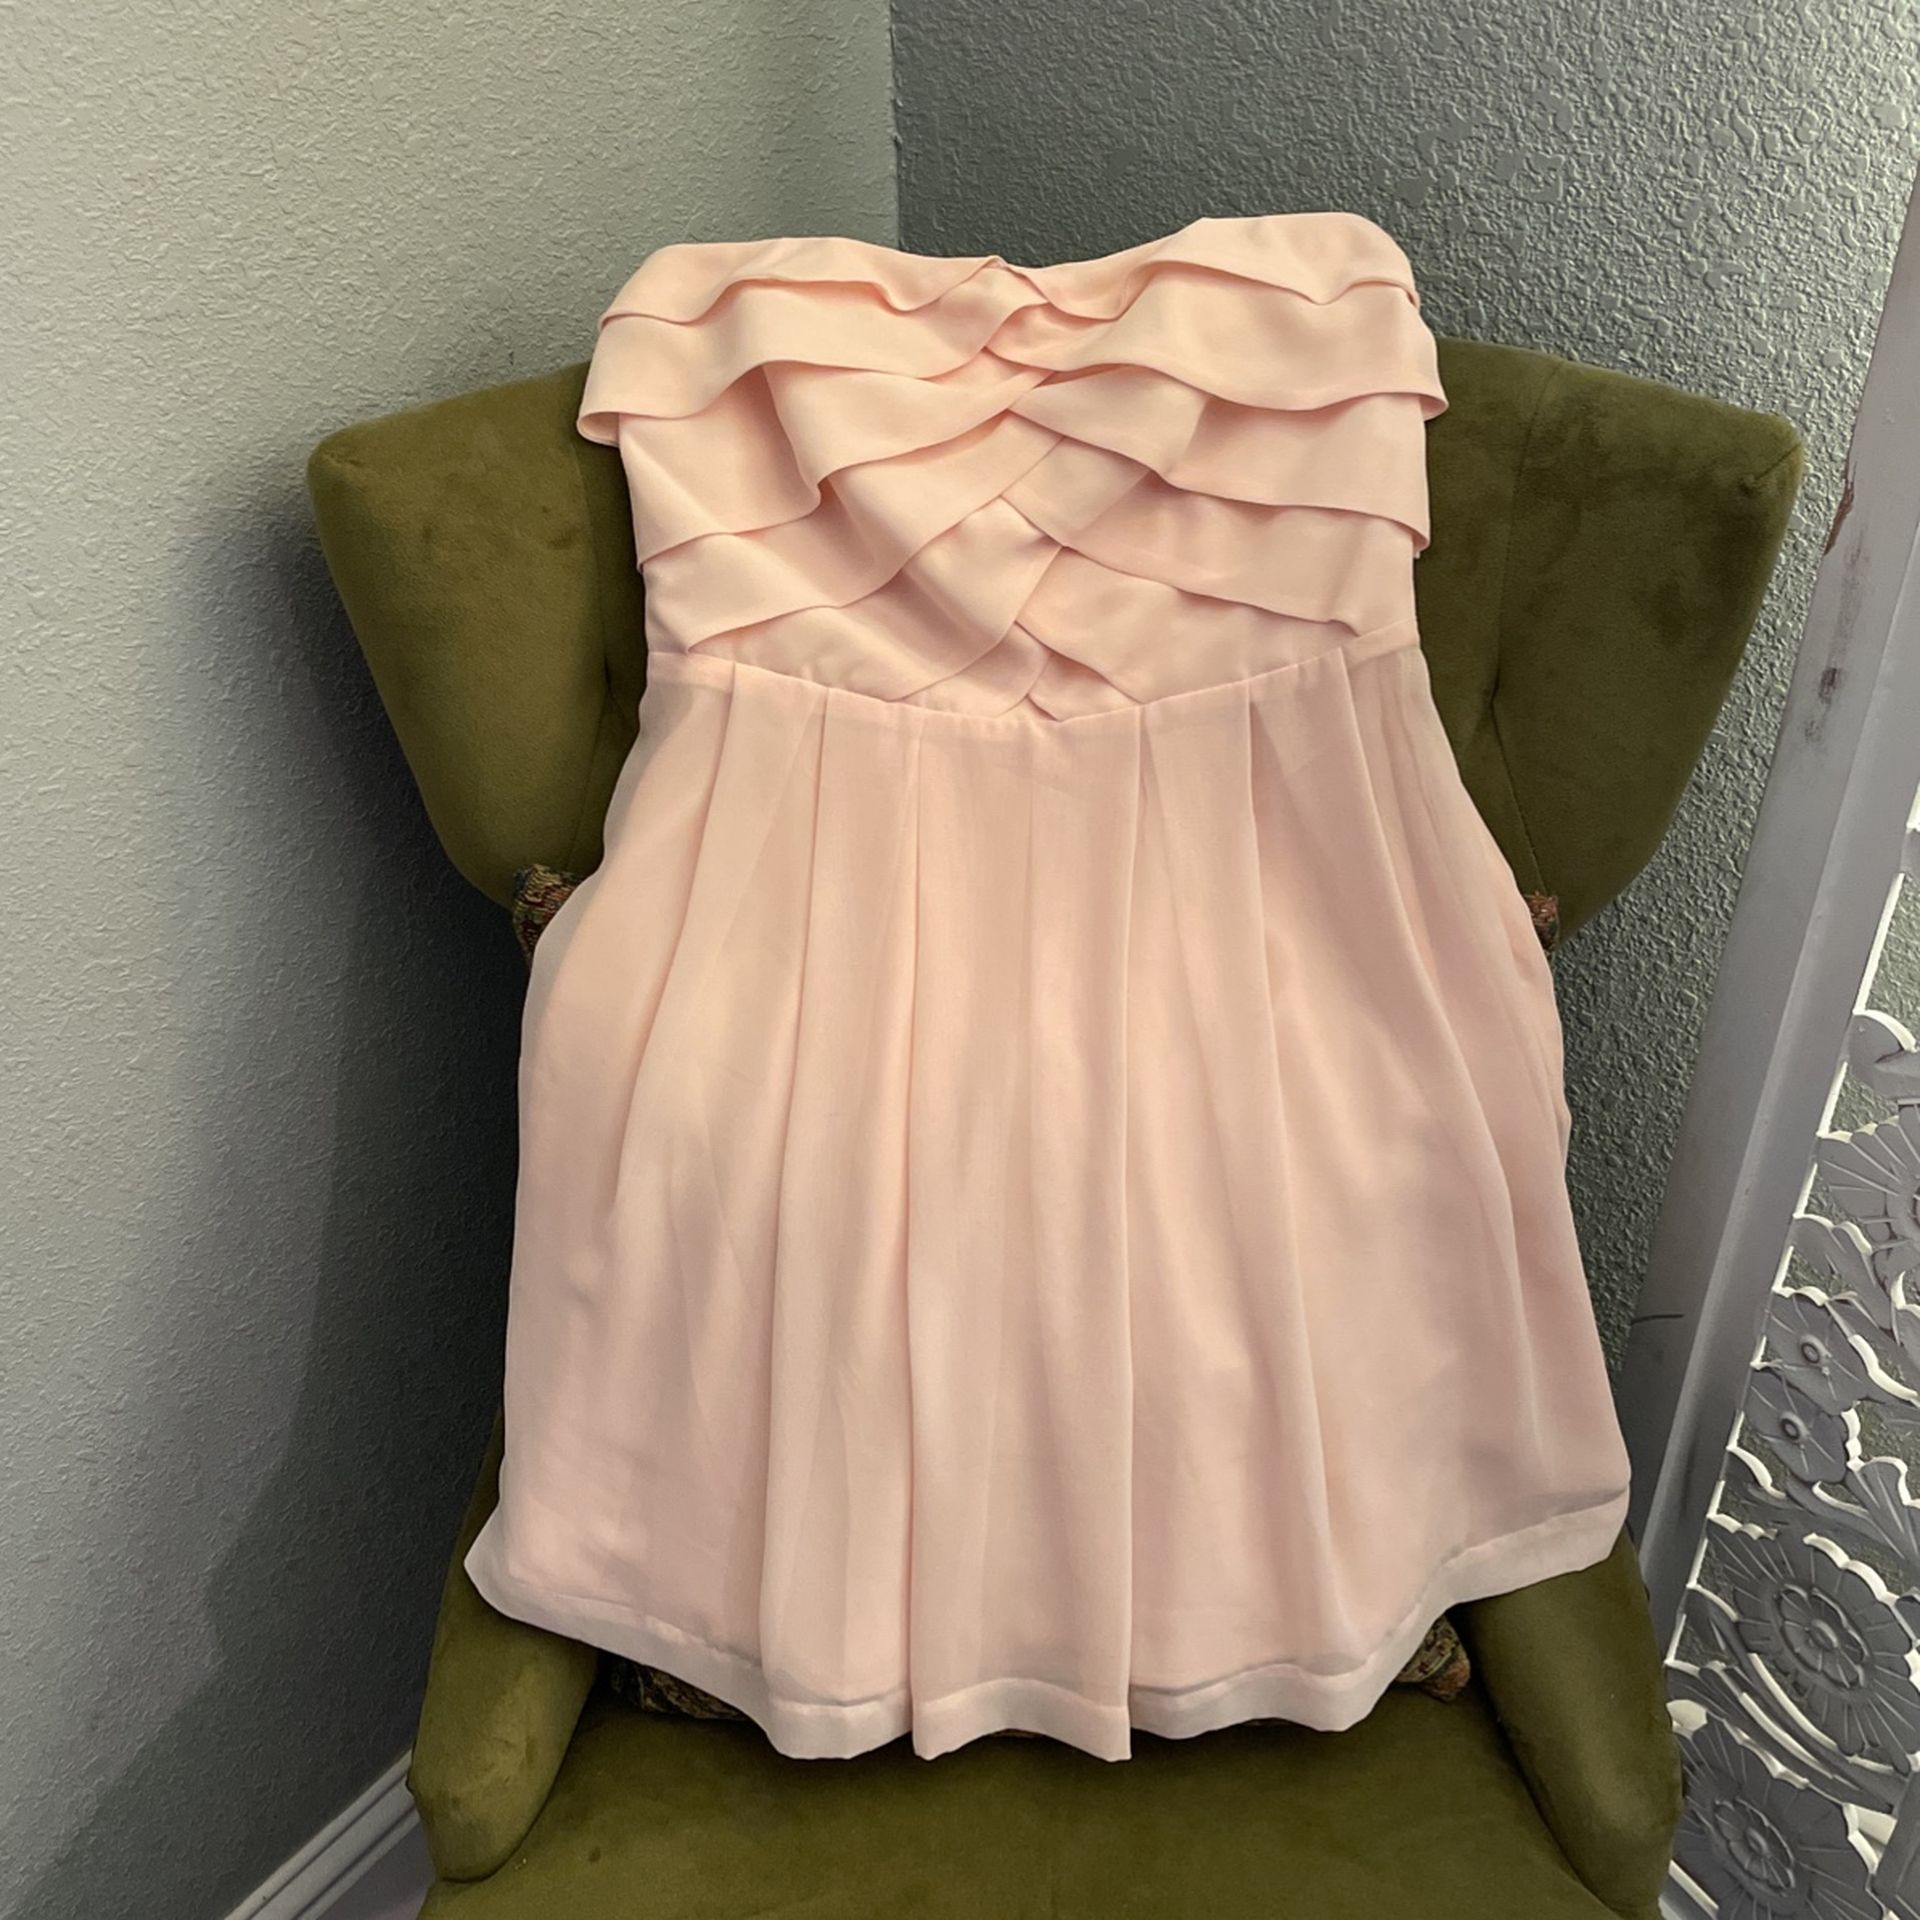 Blush Pink Strapless Dress From Express